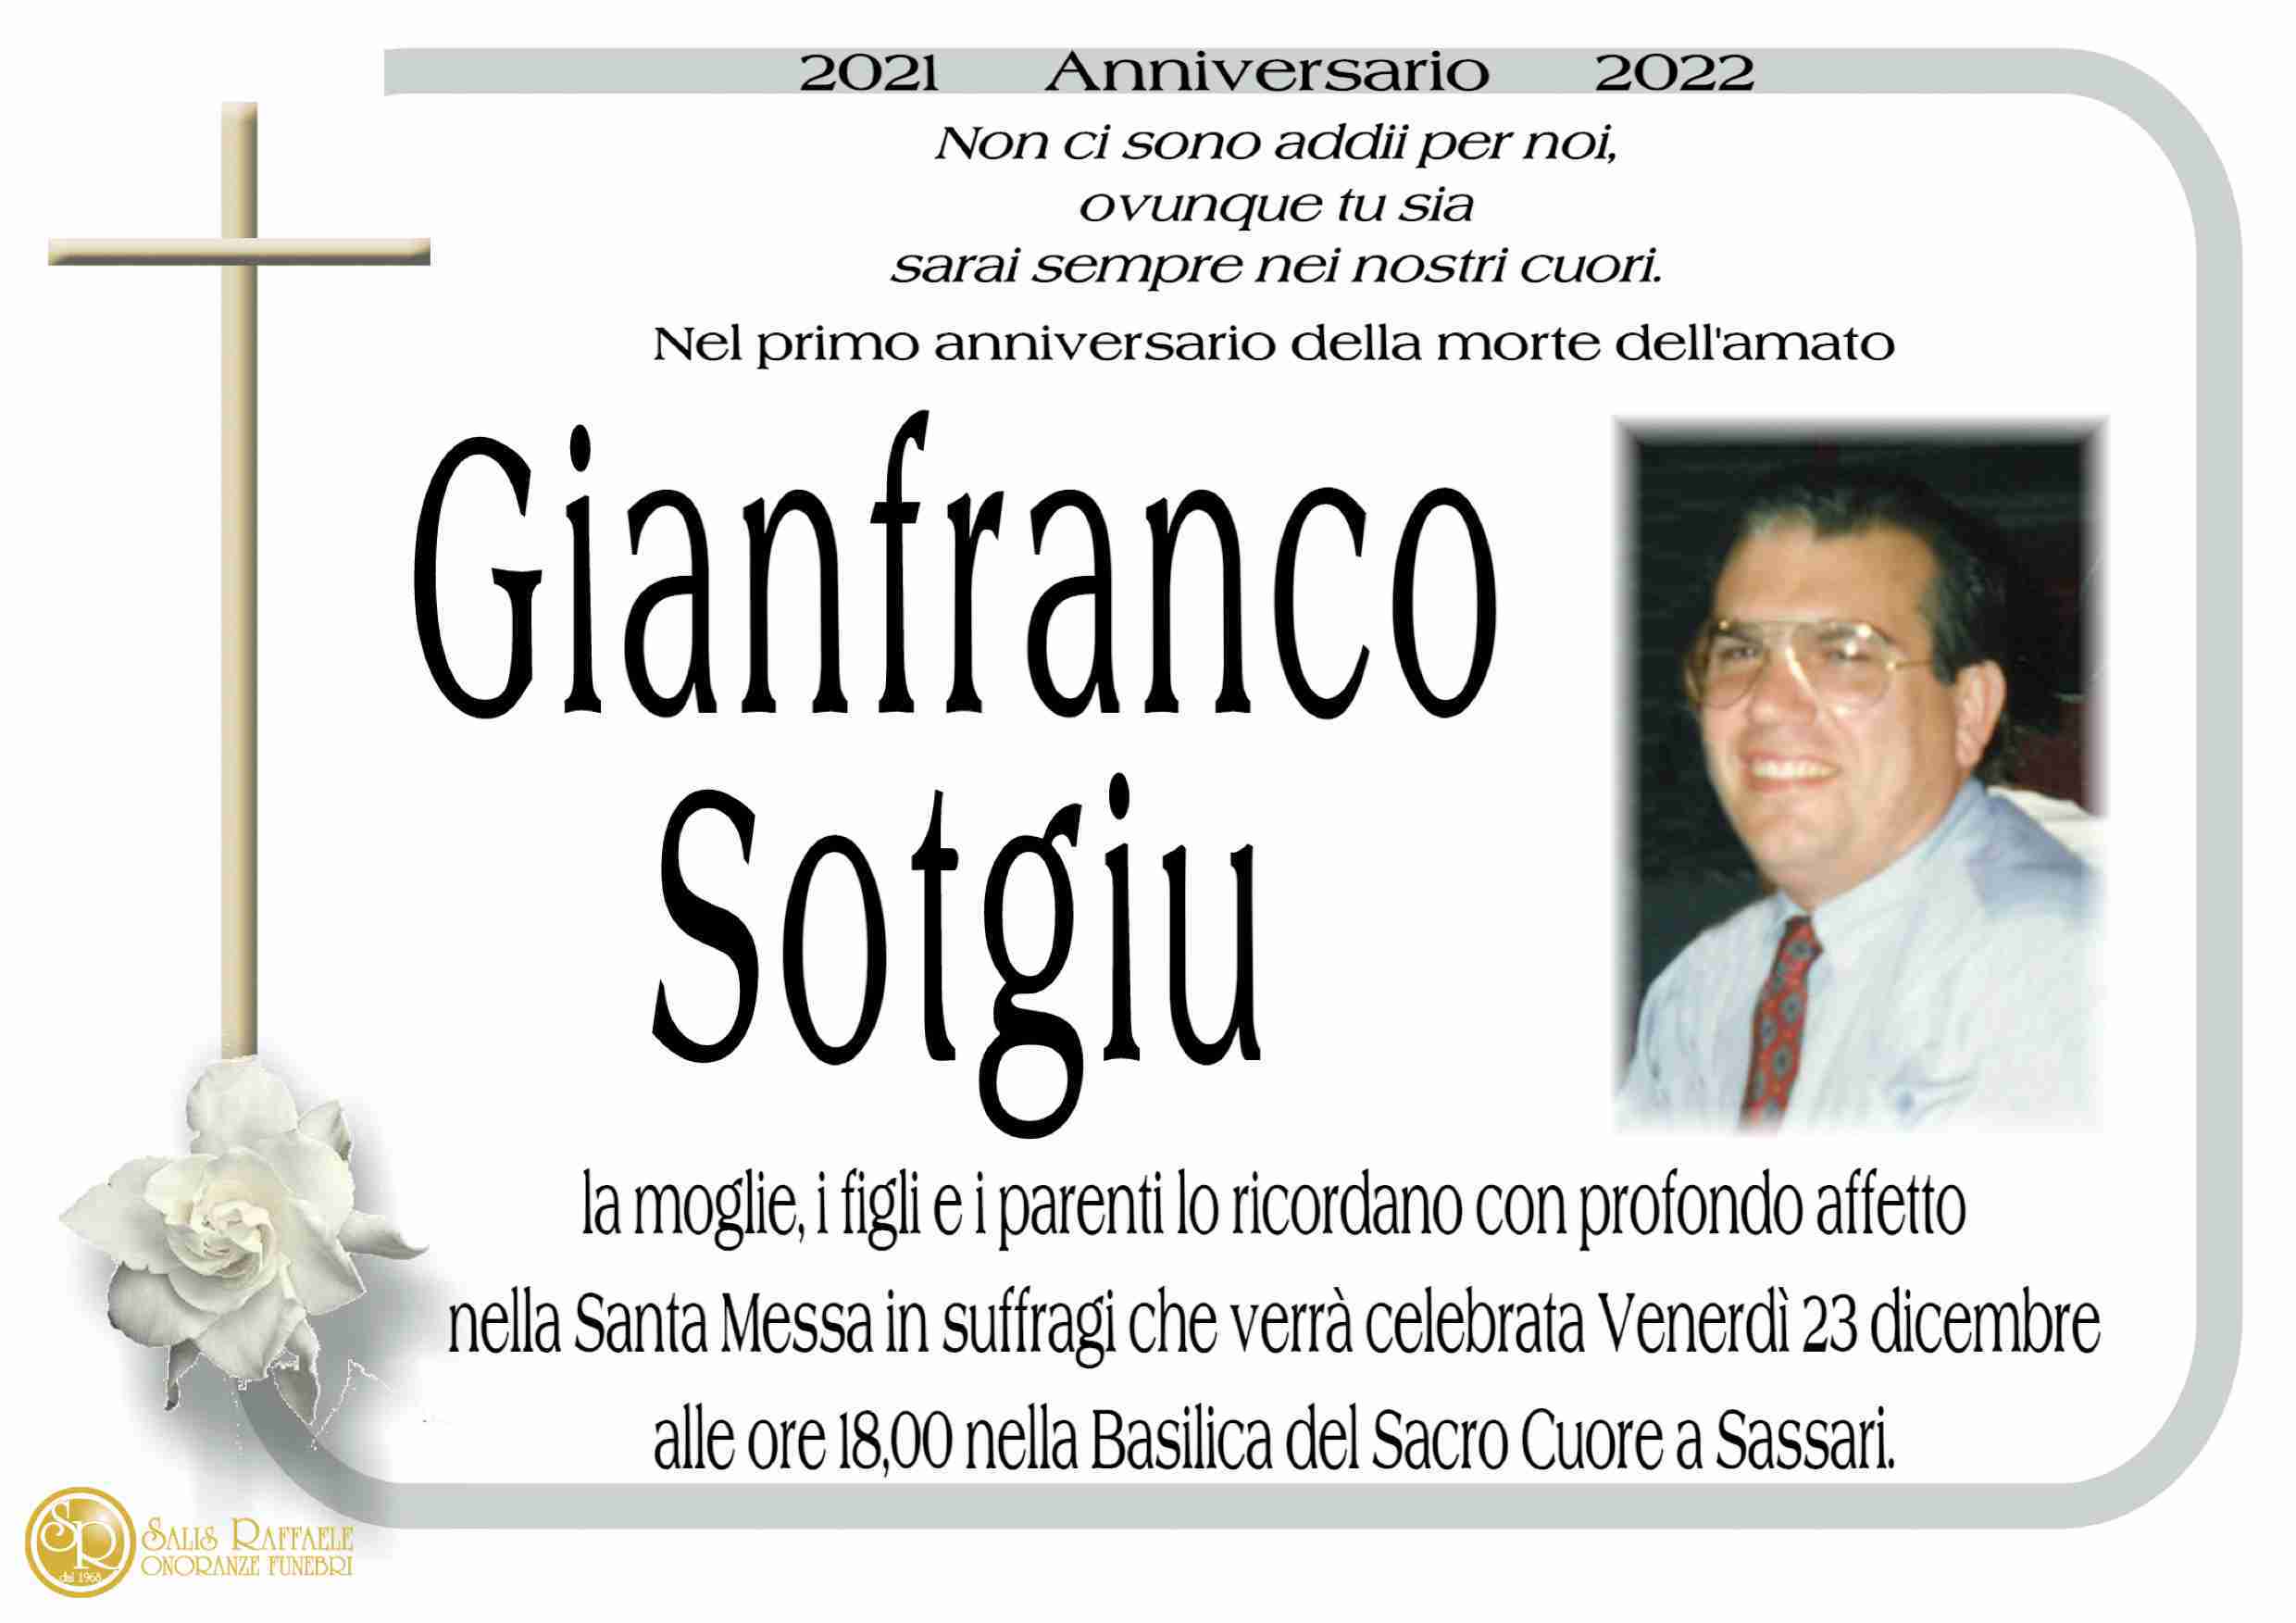 Gianfranco Sotgiu